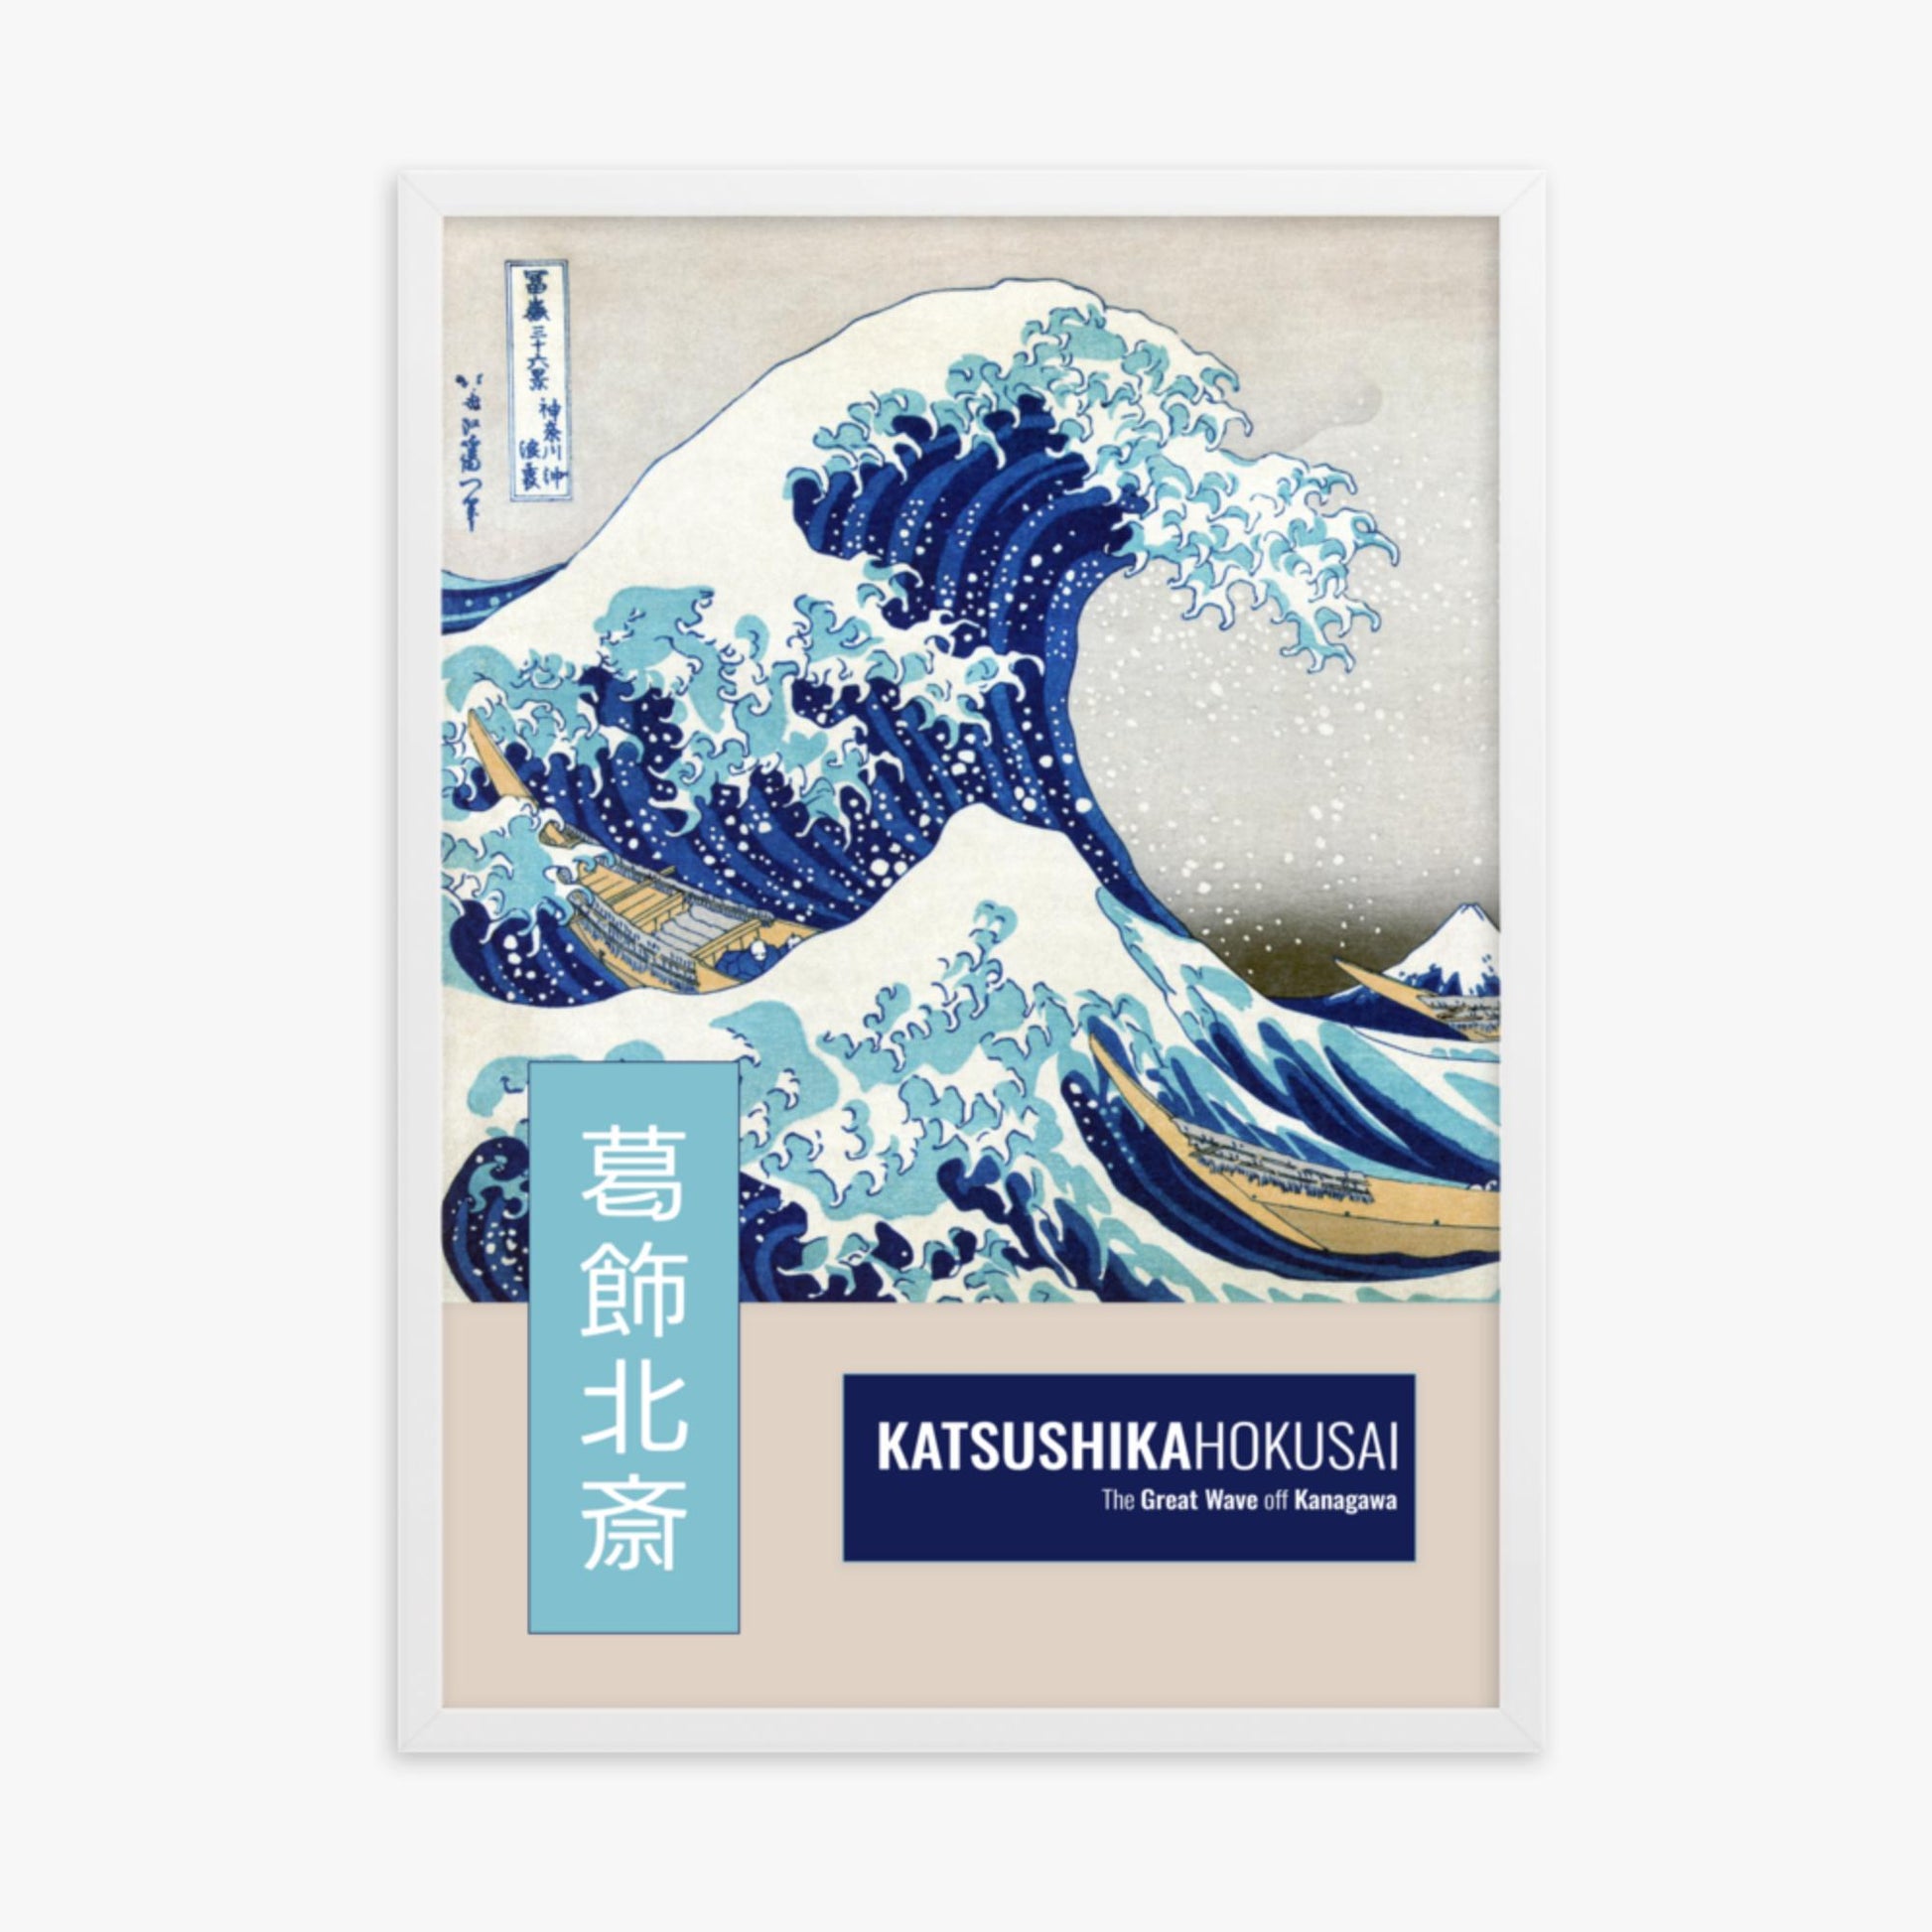 Katsushika Hokusai - The Great Wave off Kanagawa - Decoration 50x70 cm Poster With White Frame